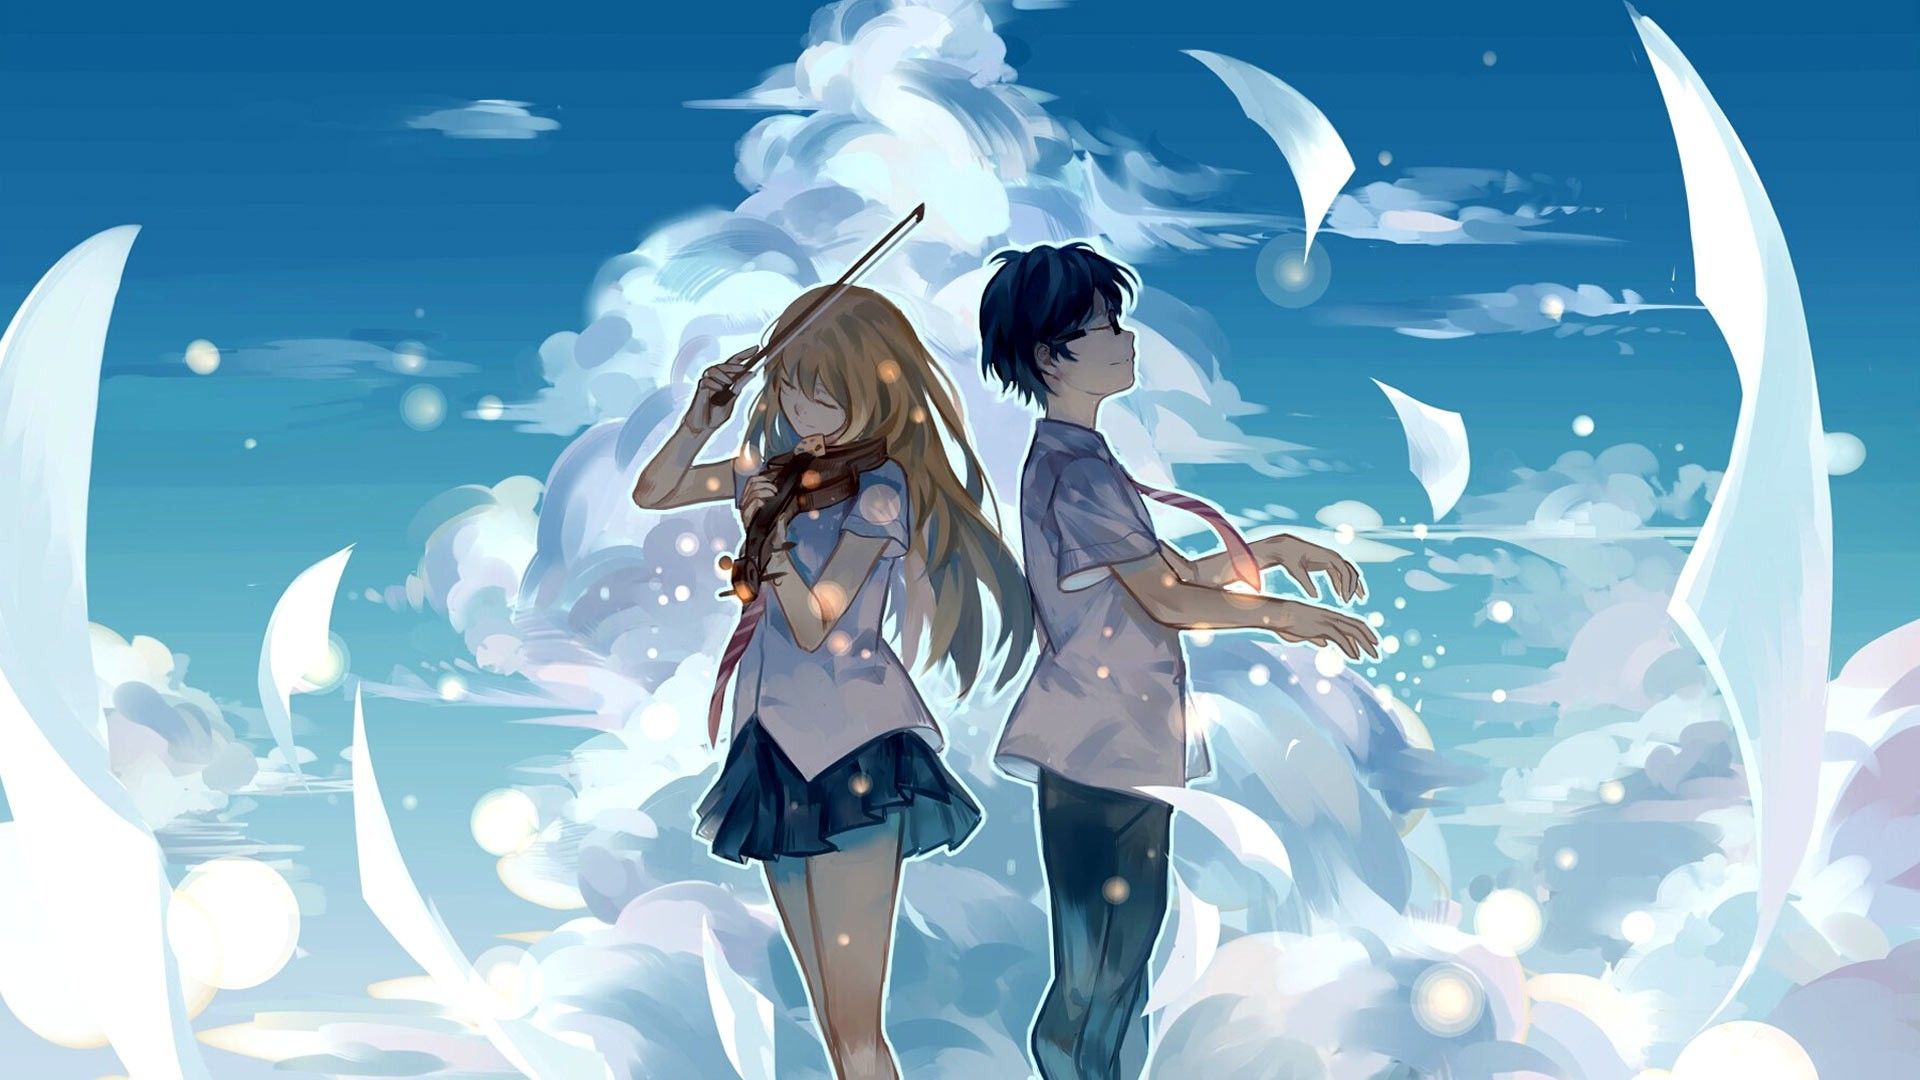 Gambar Anime Romantis Wallpaper Anime Wallpaper. HD anime wallpaper, Anime background, Anime wallpaper